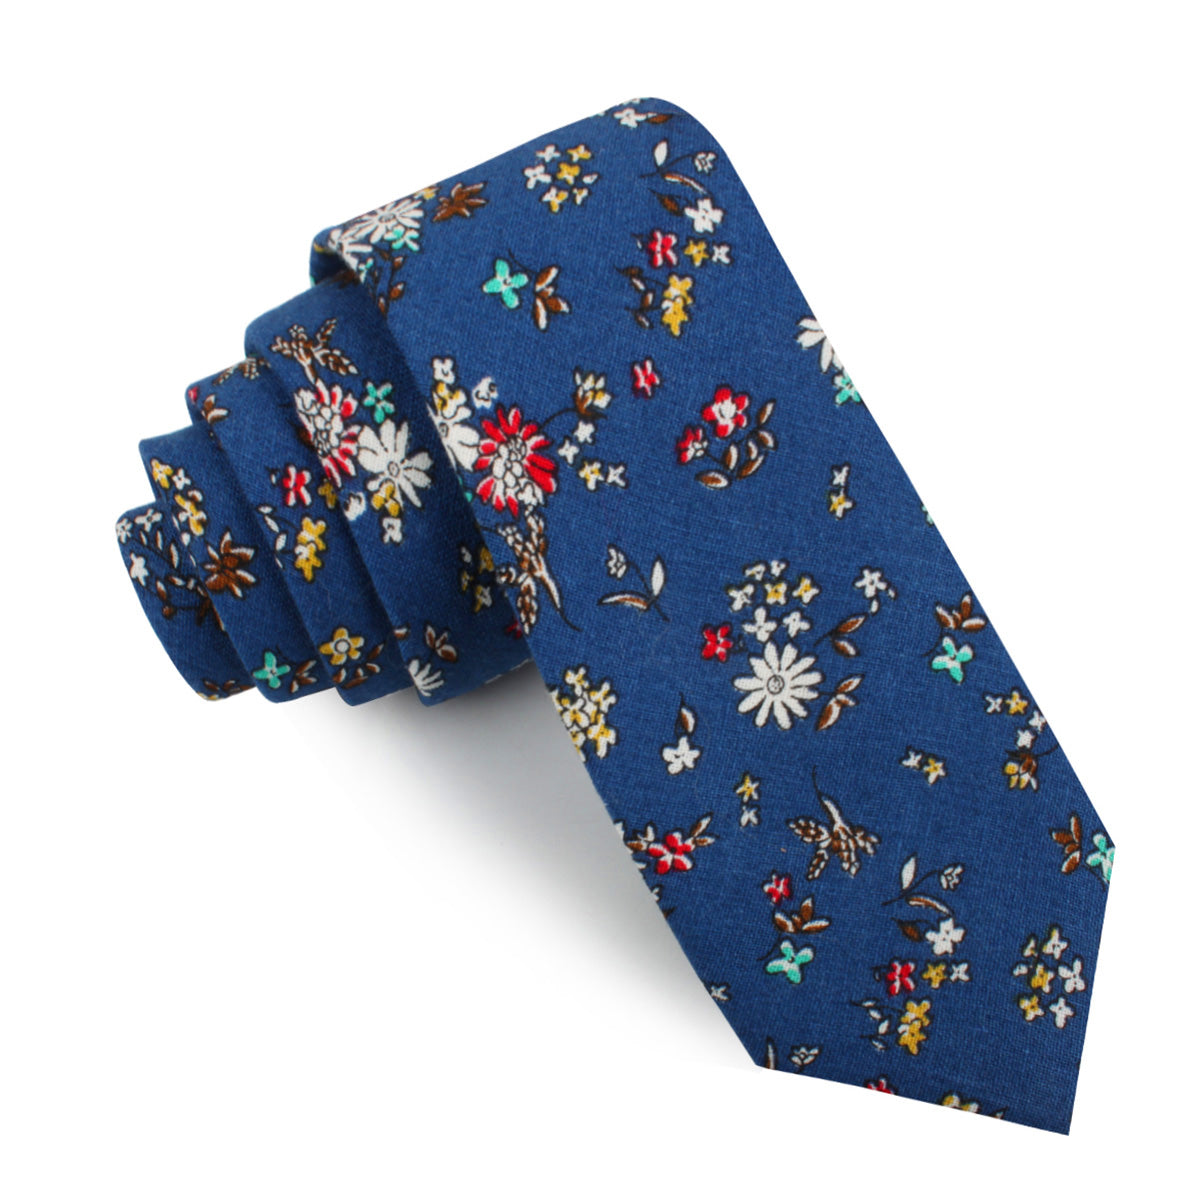 Floraison Carnivale Blue Floral Skinny Tie